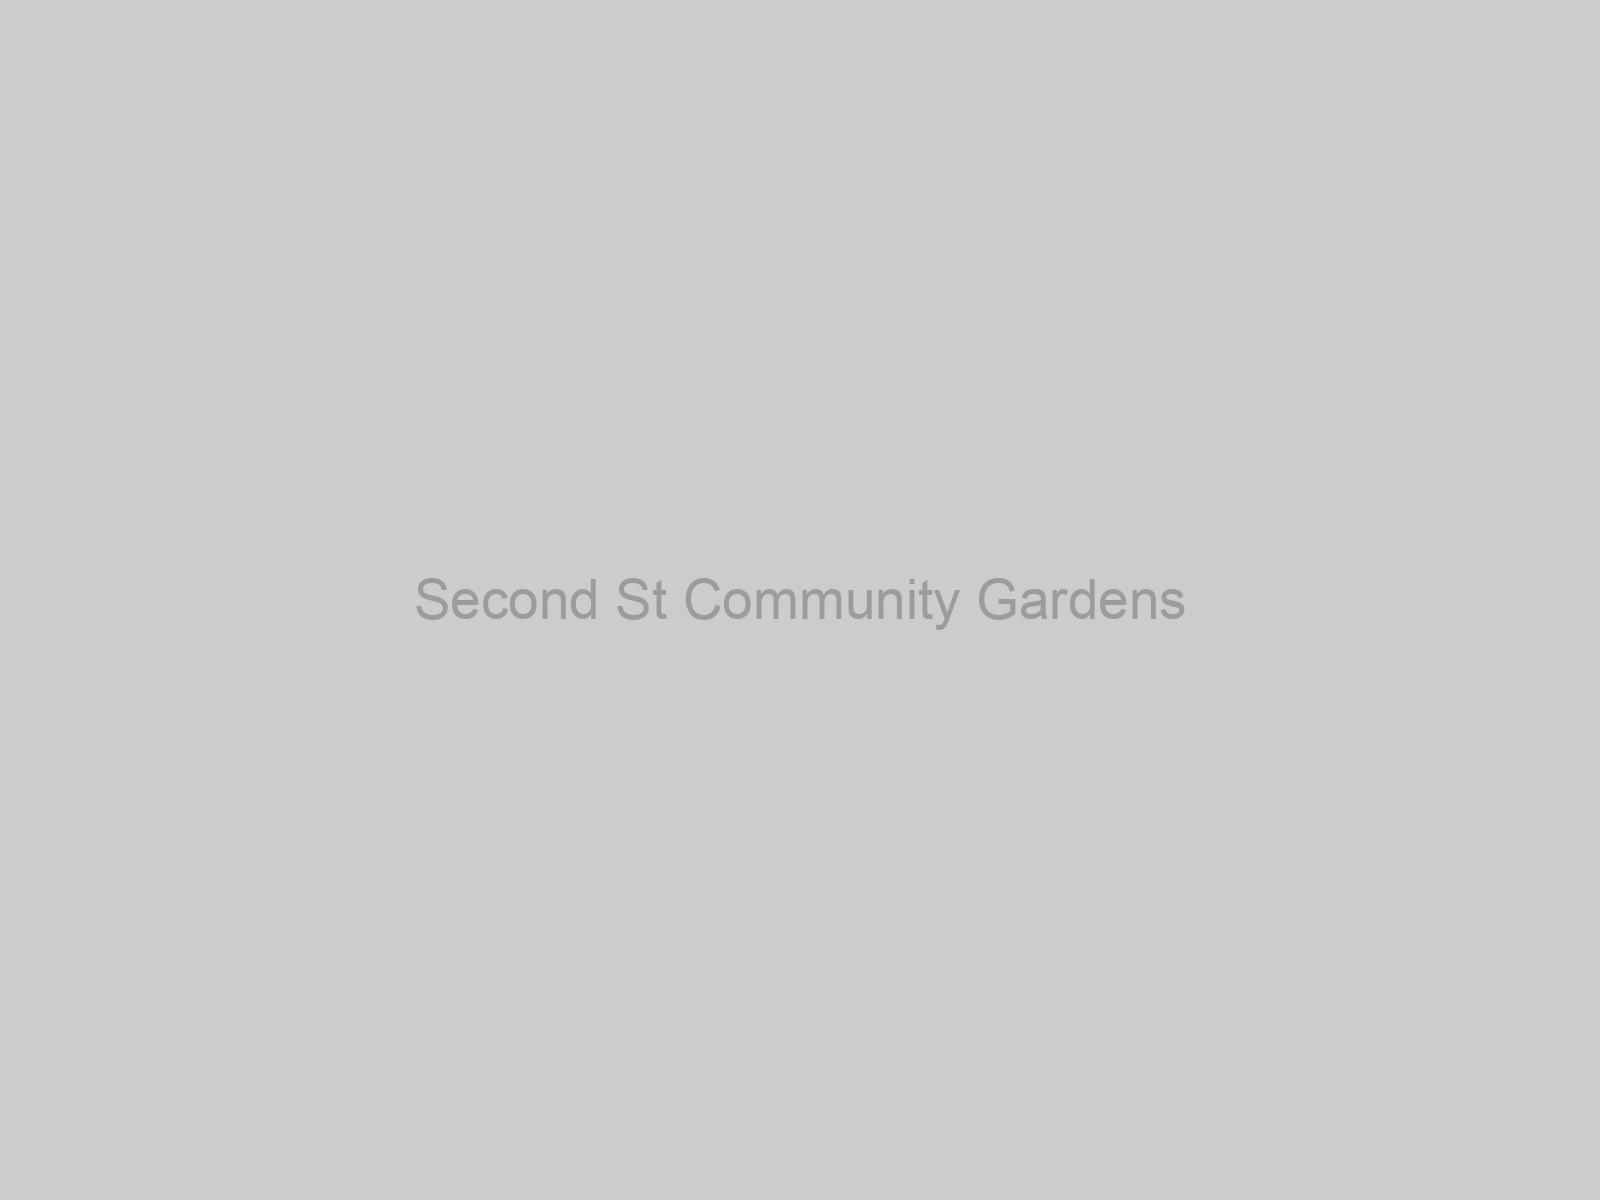 Second St Community Gardens